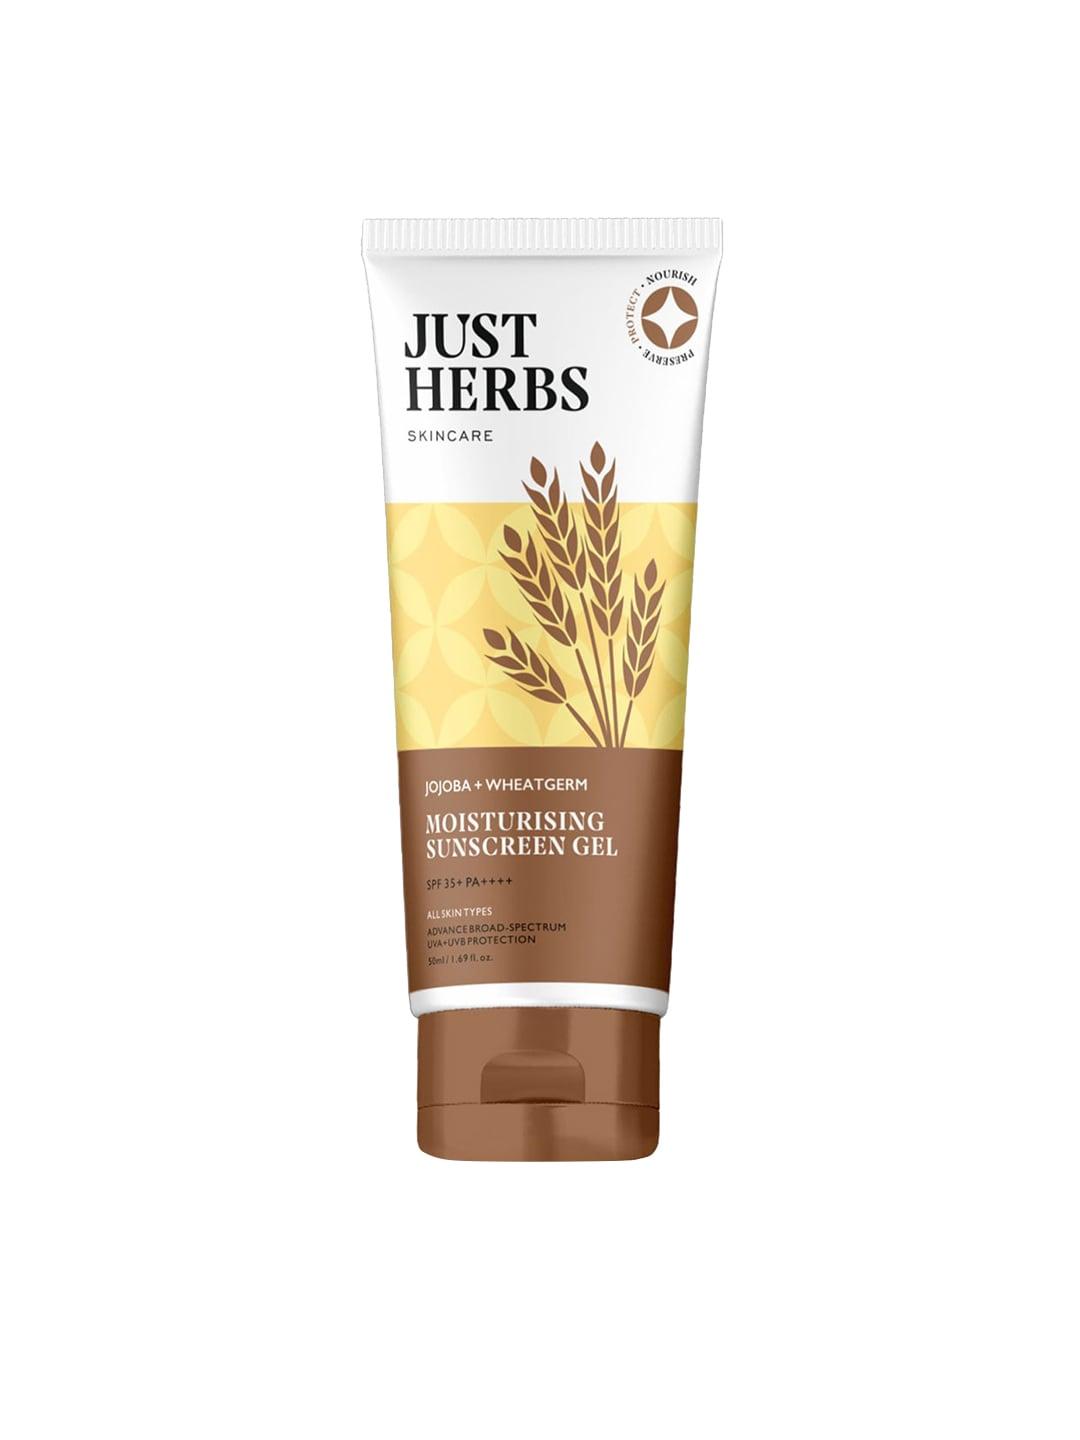 Just Herbs Moisturizing Sun Protection Gel SPF 35+ PA++++ with Jojoba & Wheatgerm - 50ml